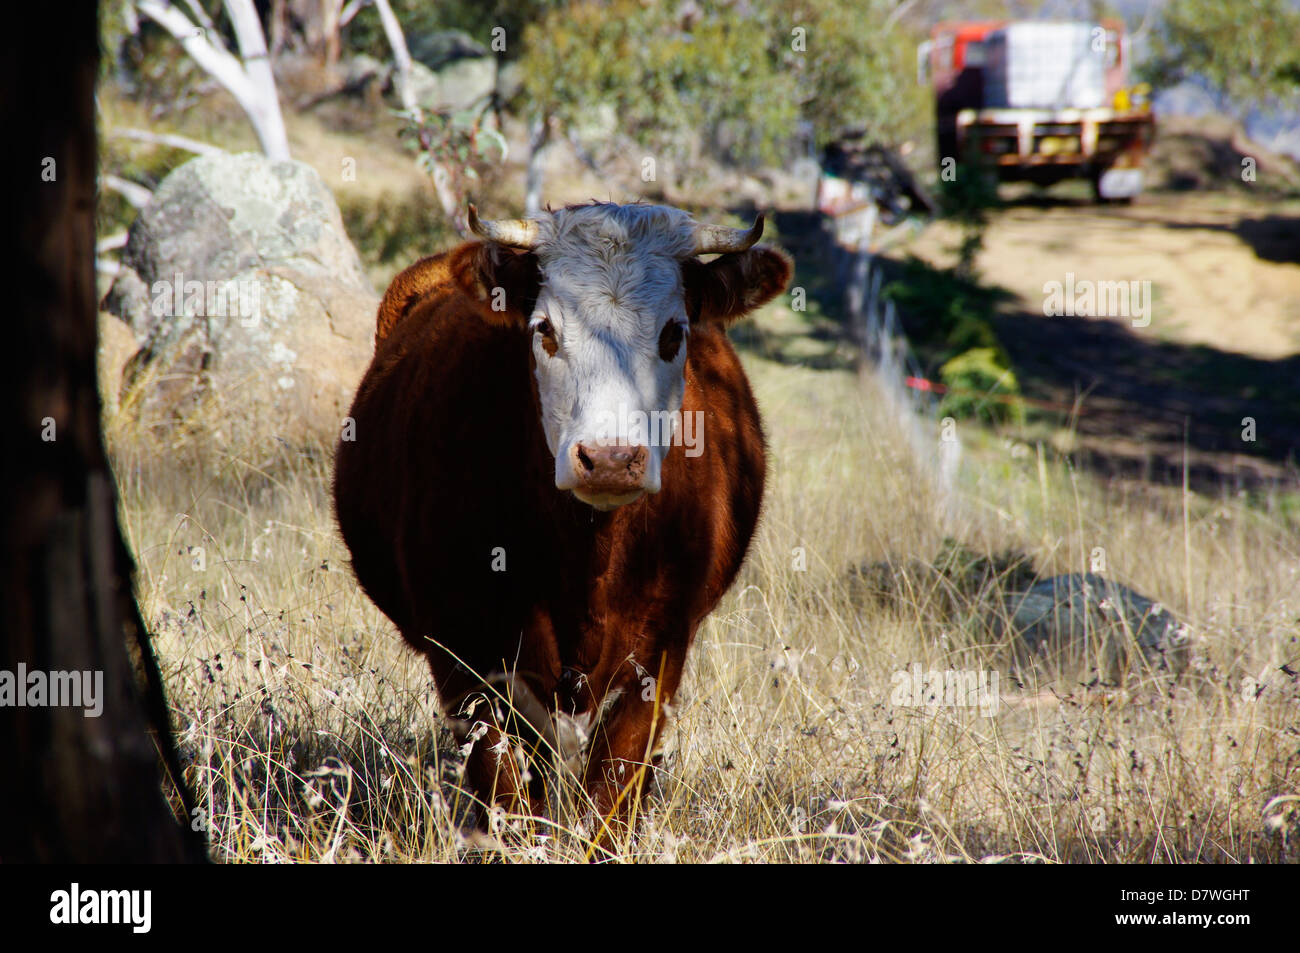 Cow in paddock facing camera, bright sunlight Stock Photo